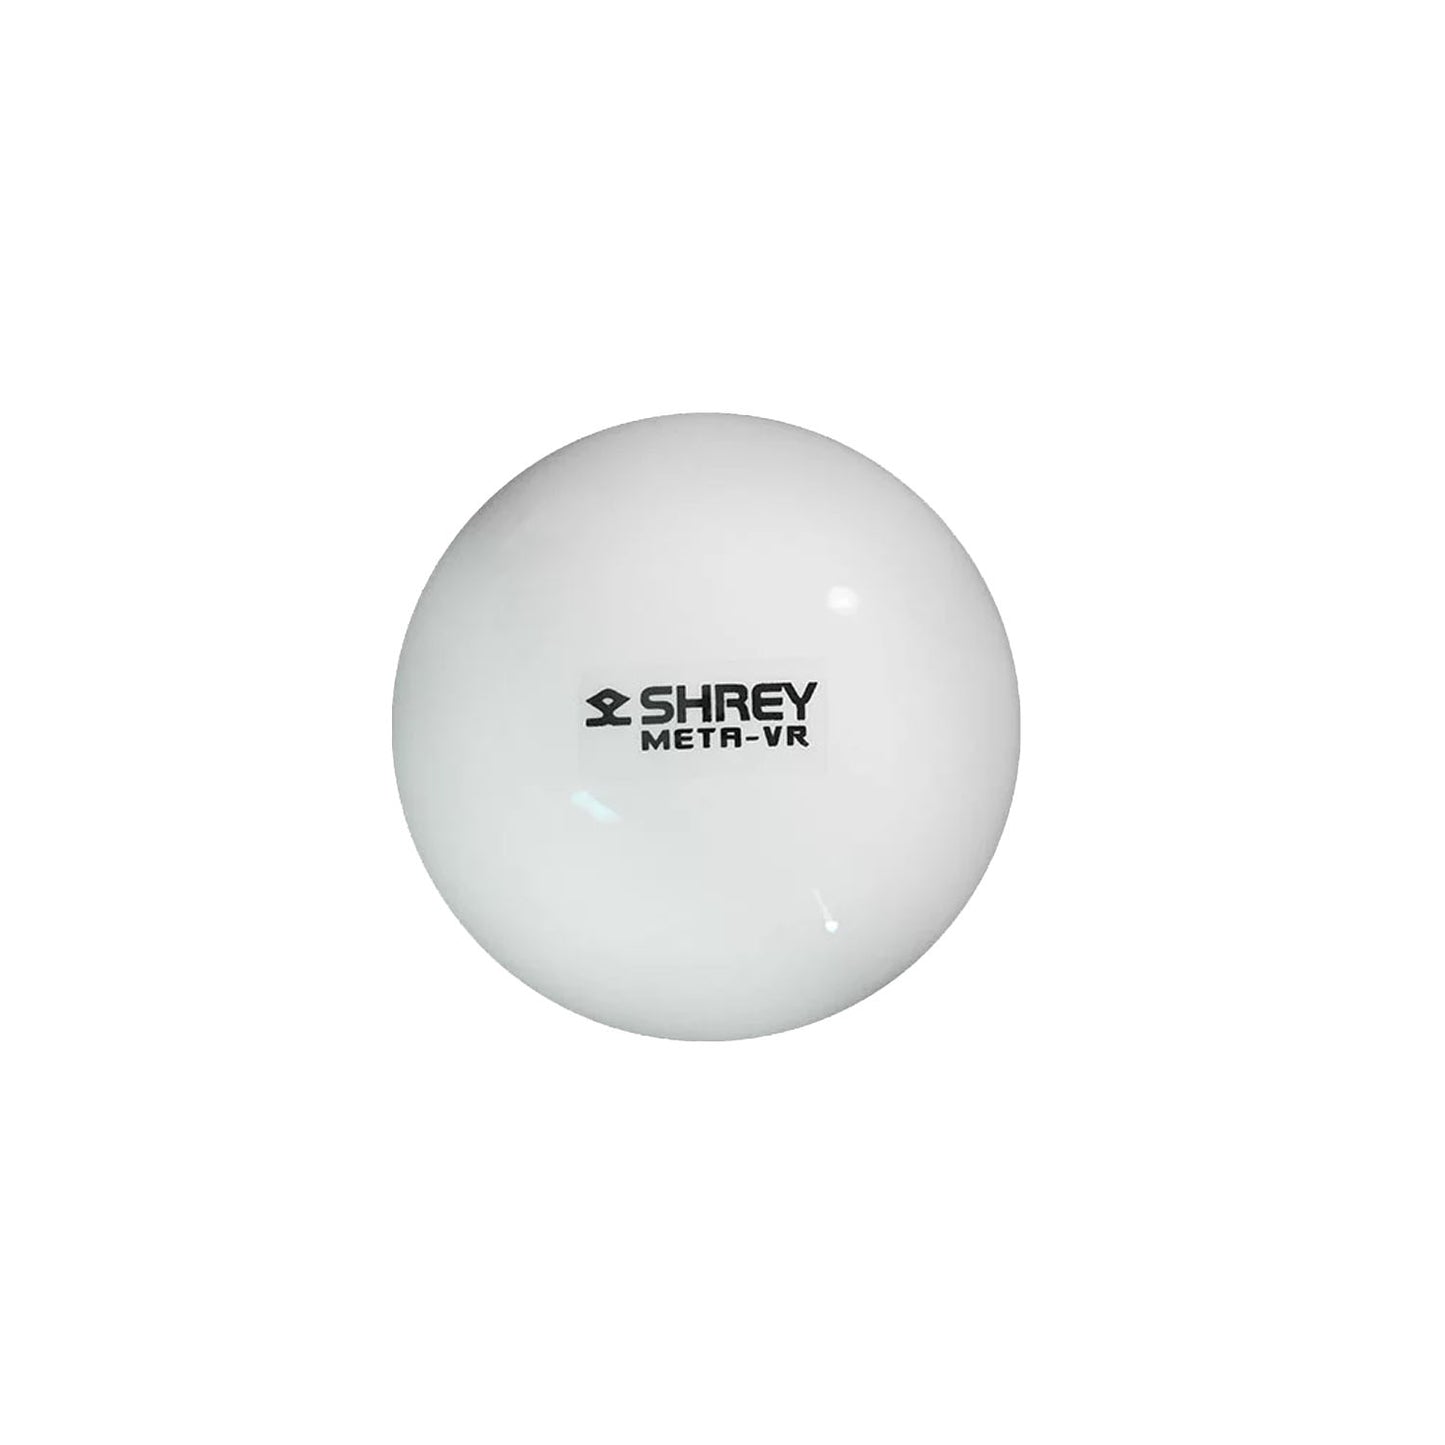 Shrey Meta VR Plain Hockey Ball - Best Price online Prokicksports.com